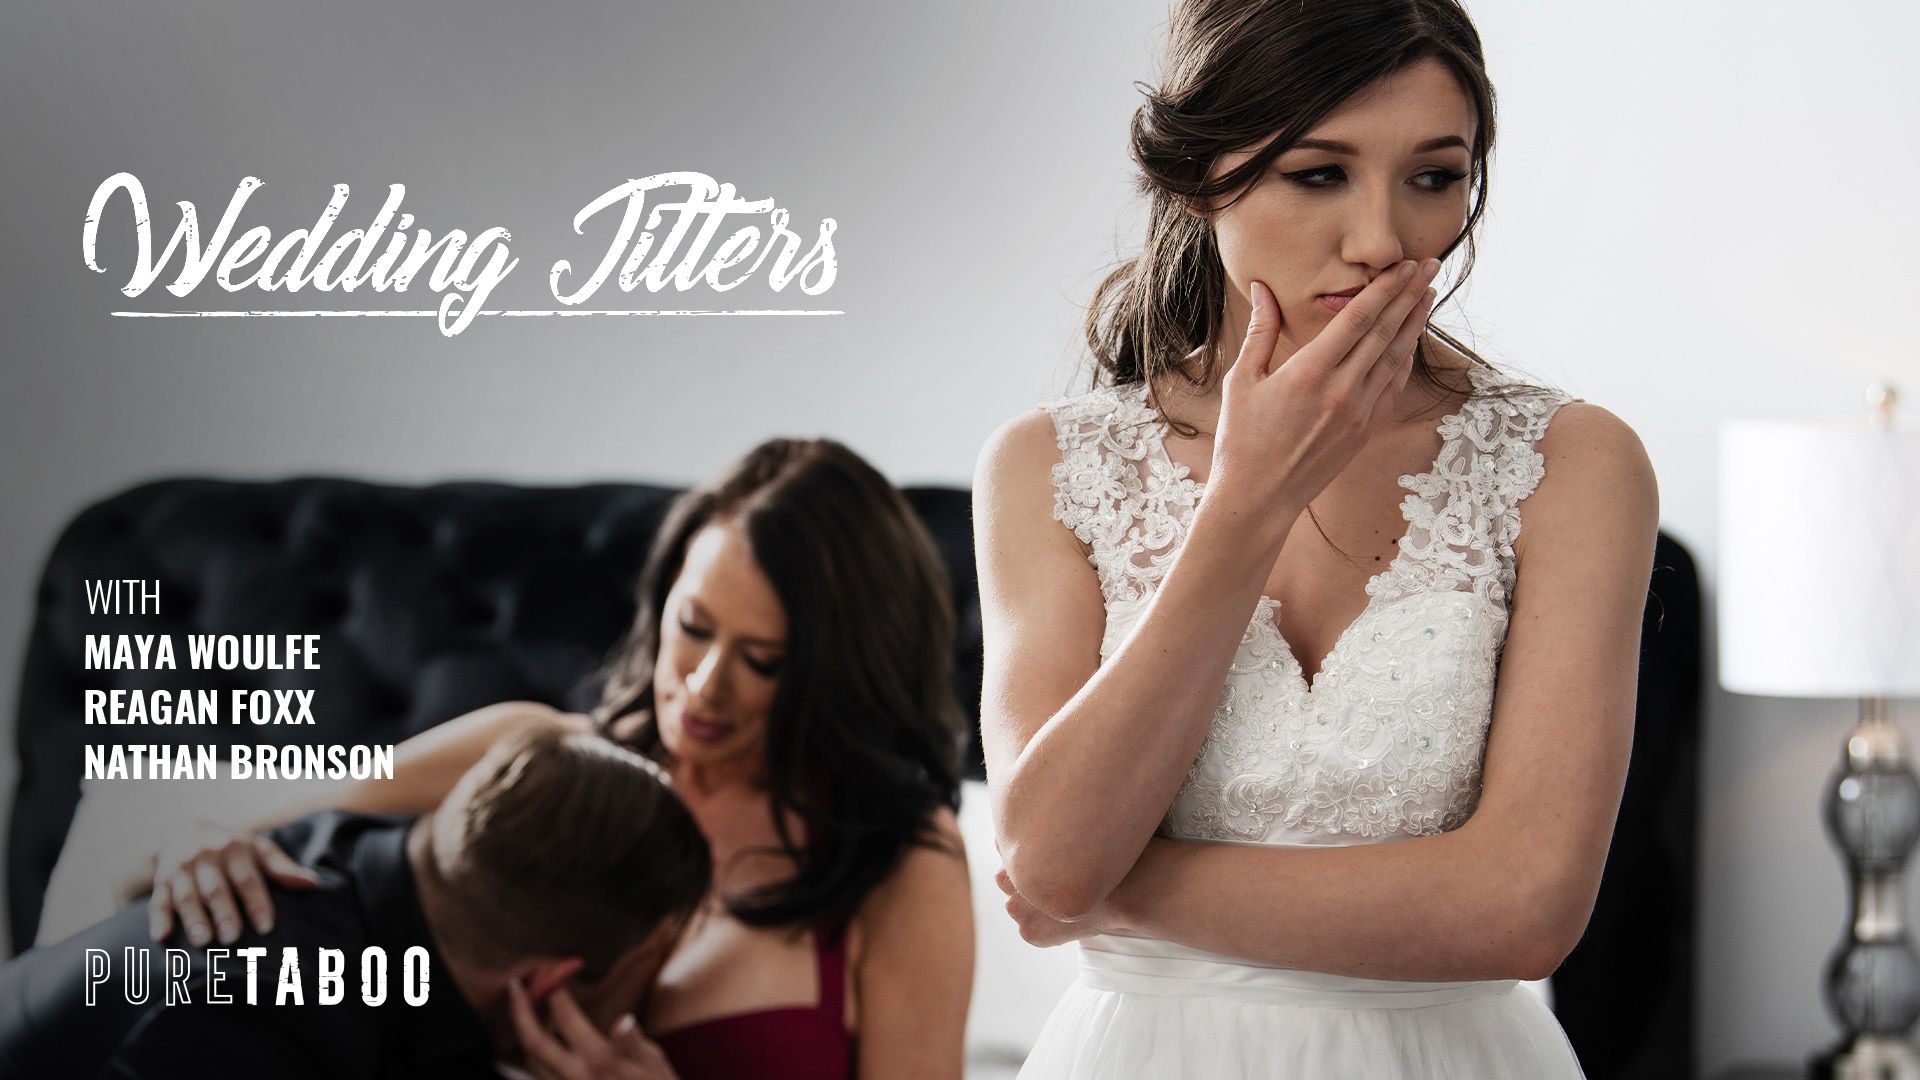 Pure Taboo - Wedding Jitters